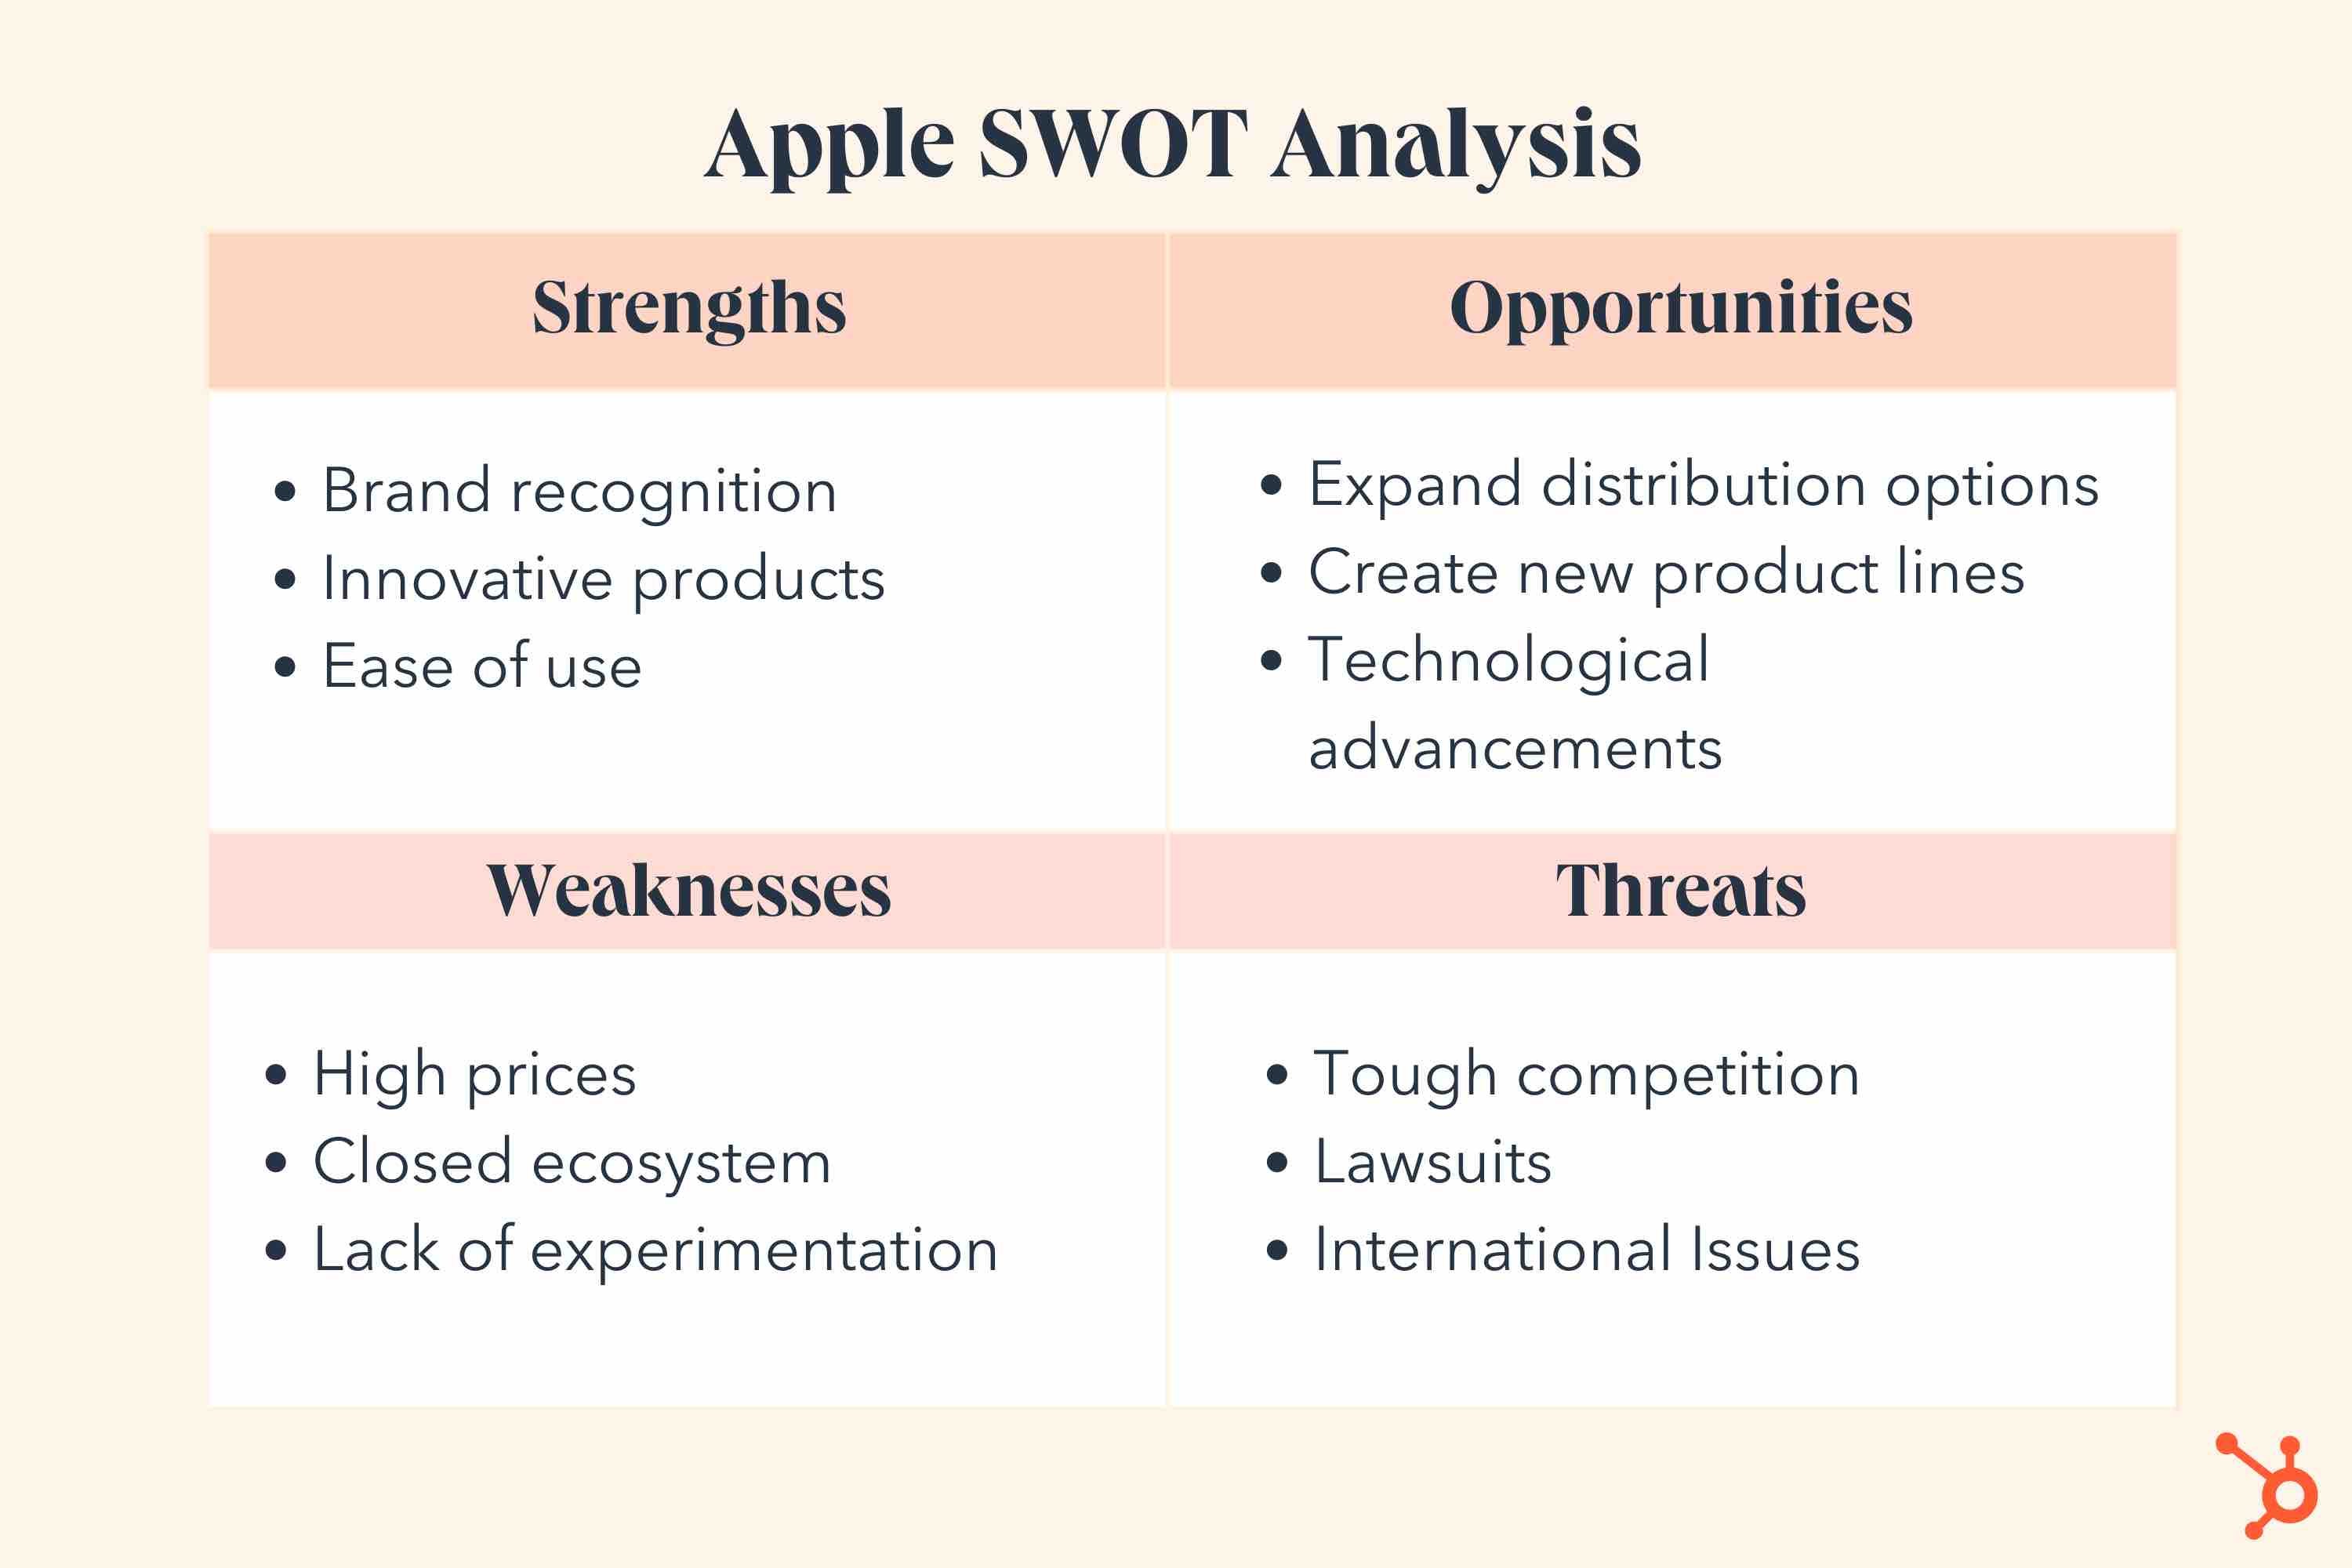 swot analysis market research